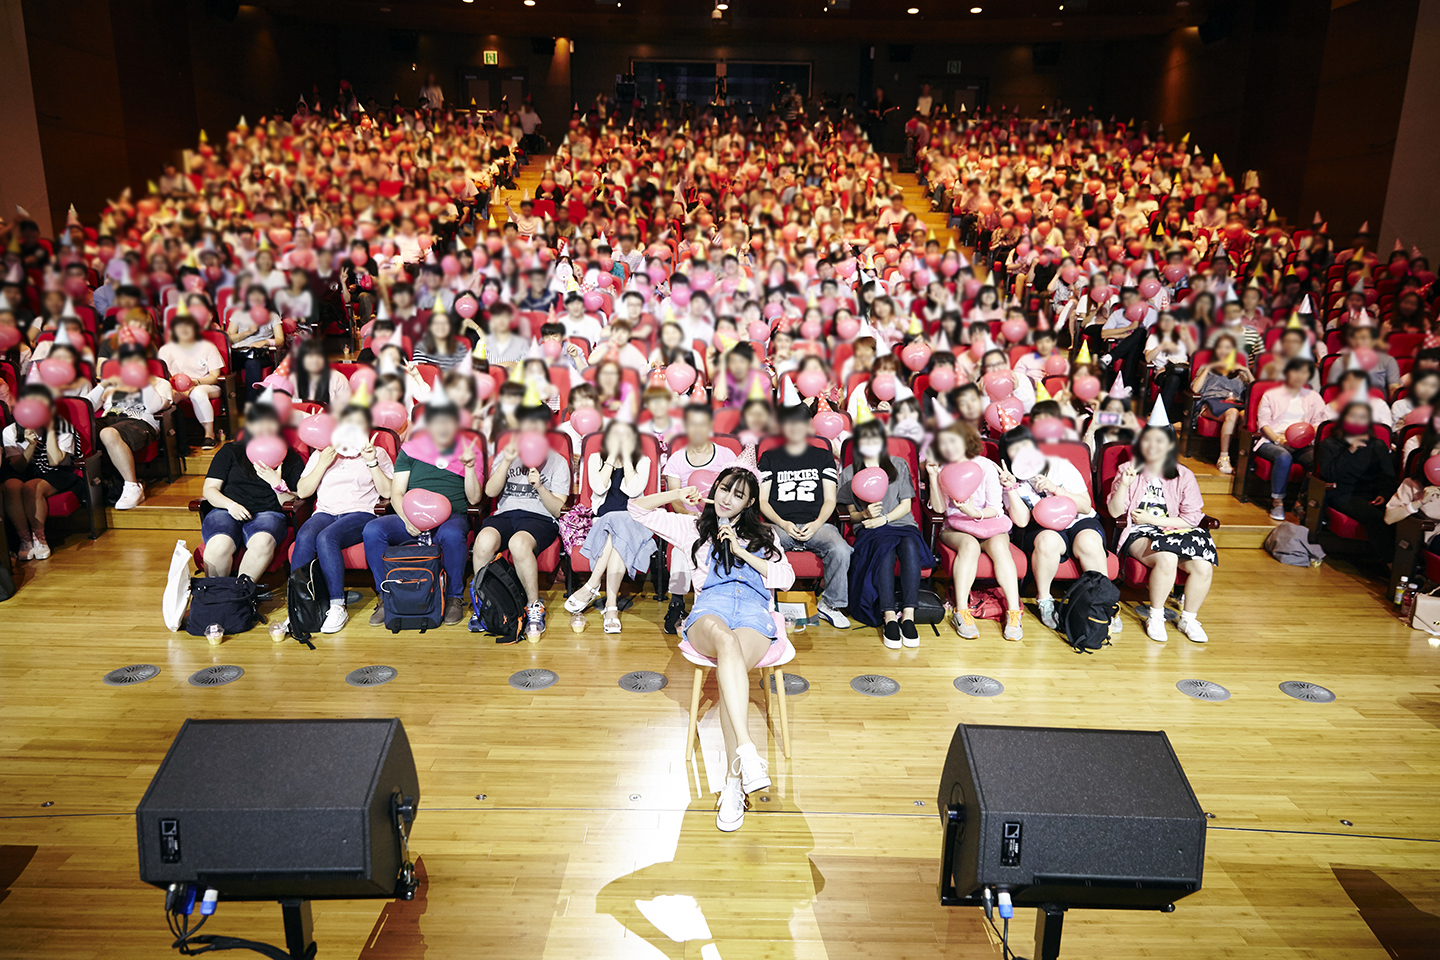 [PIC][01-08-2015]Tiffany tham dự "Tiffany's Birthday Party" tại SM COEX Artium vào hôm nay - Page 2 XQF9Ilp_Iu